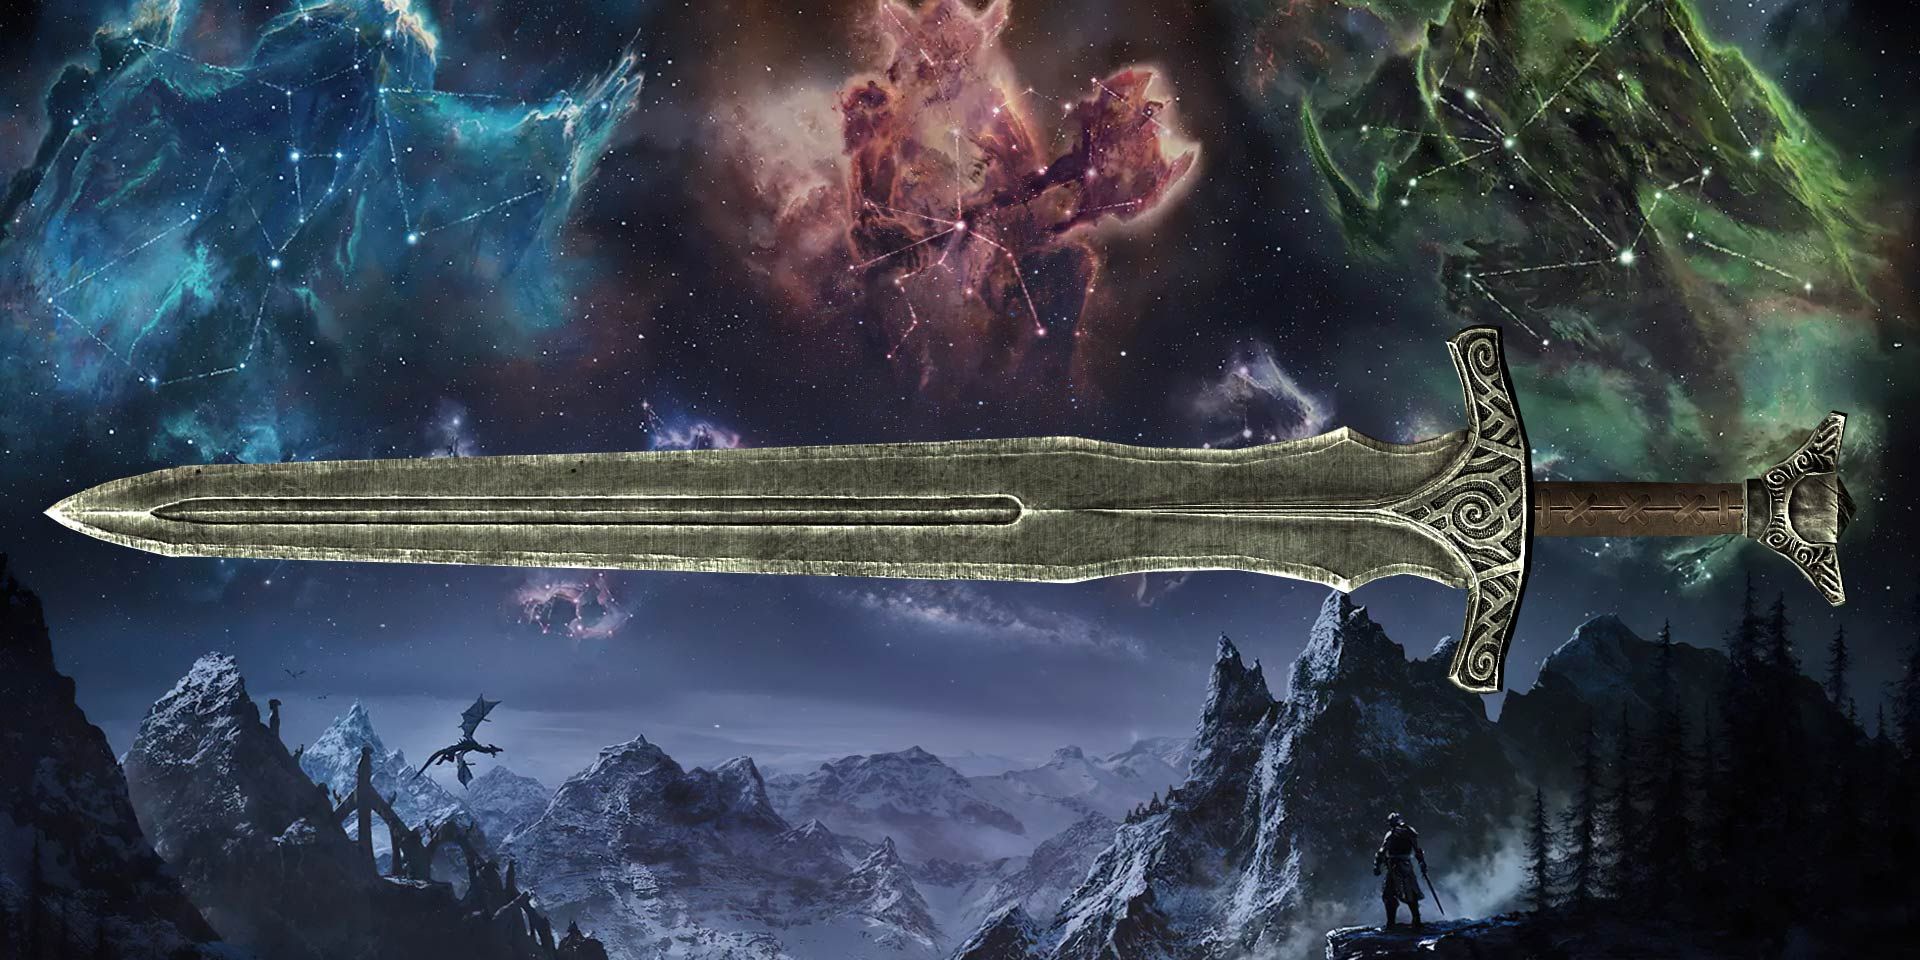 A Lunar Steel Sword among mountains and Elder Scrolls star signs.